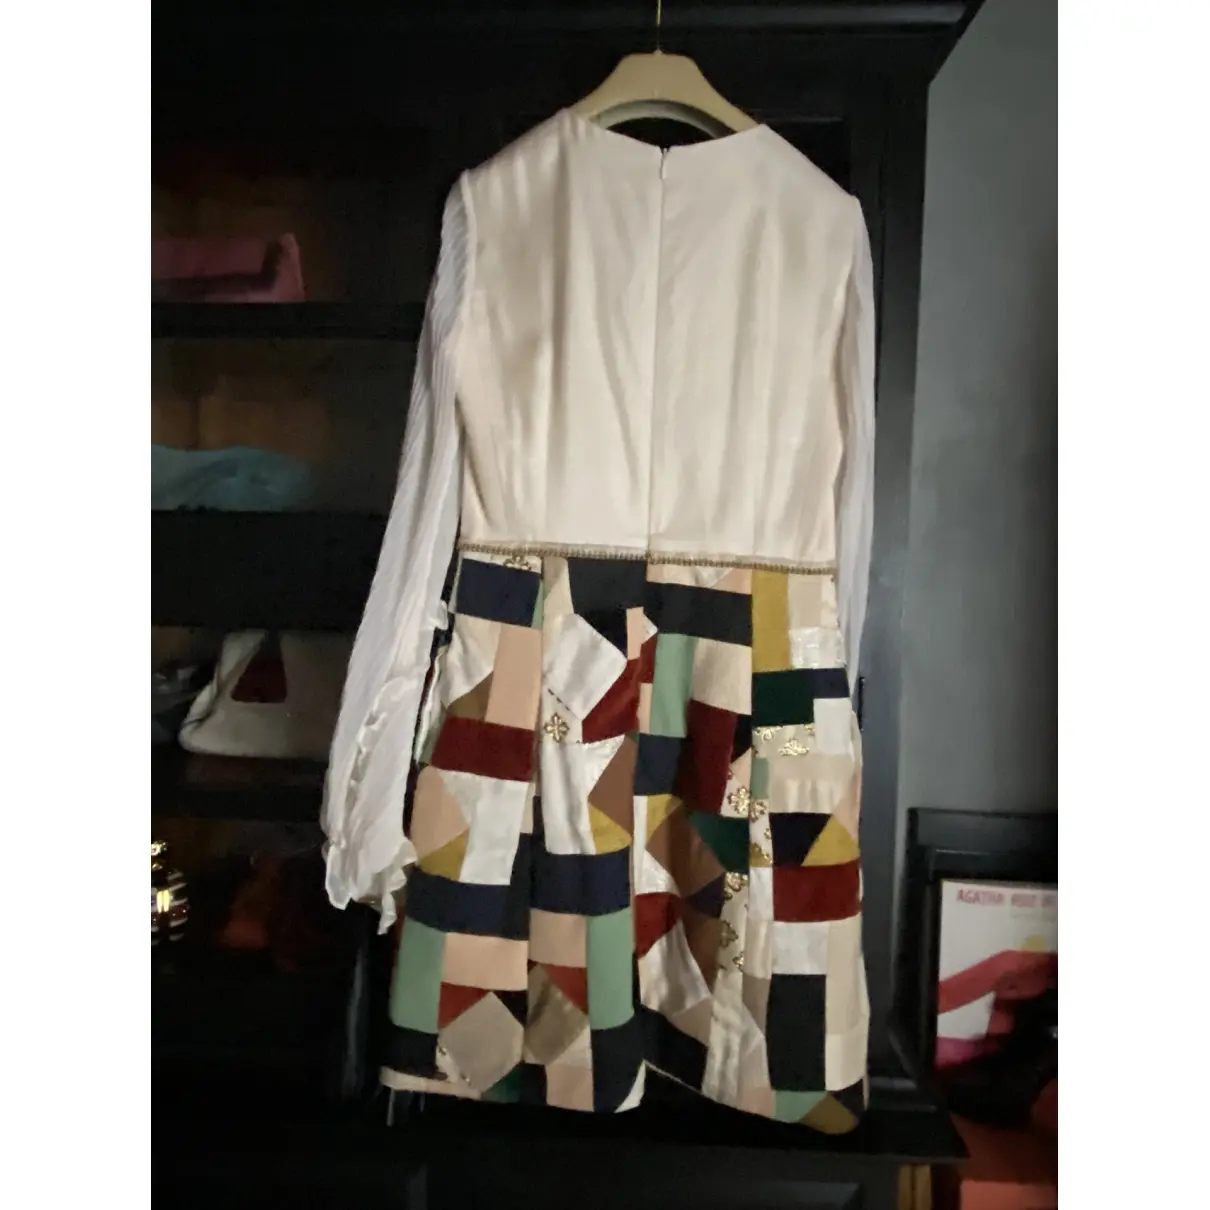 Buy Chloé Silk mid-length dress online